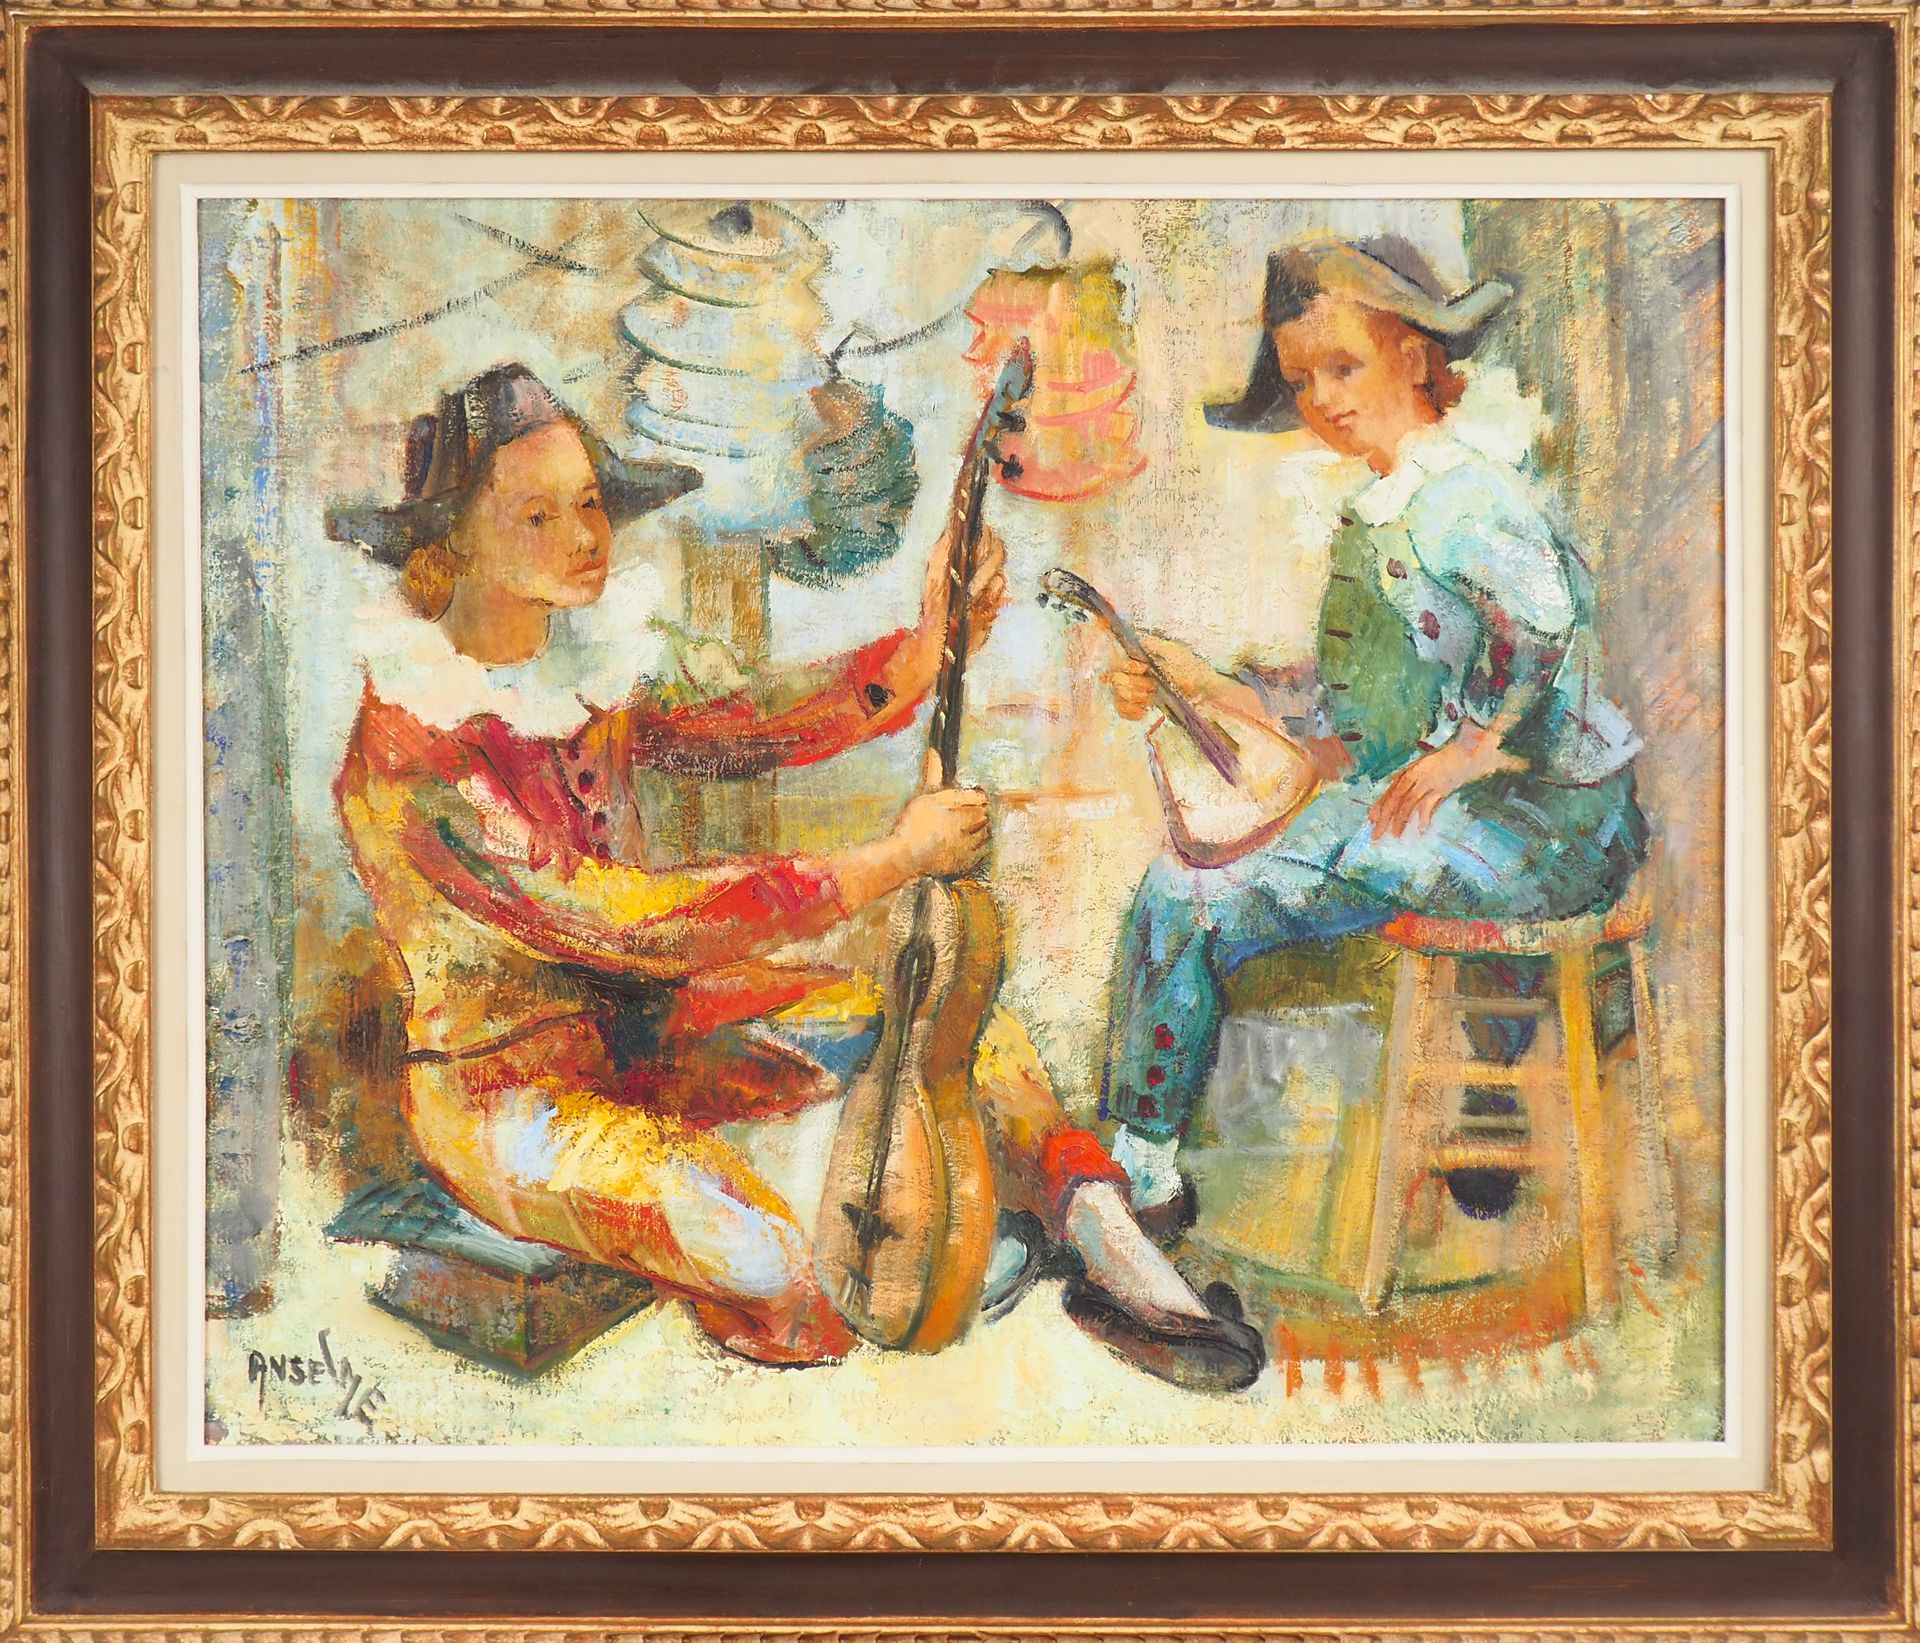 Null ANSELME。
"Harlequin音乐人"。
布面油画，左下方有签名。
尺寸为60 x 73厘米。